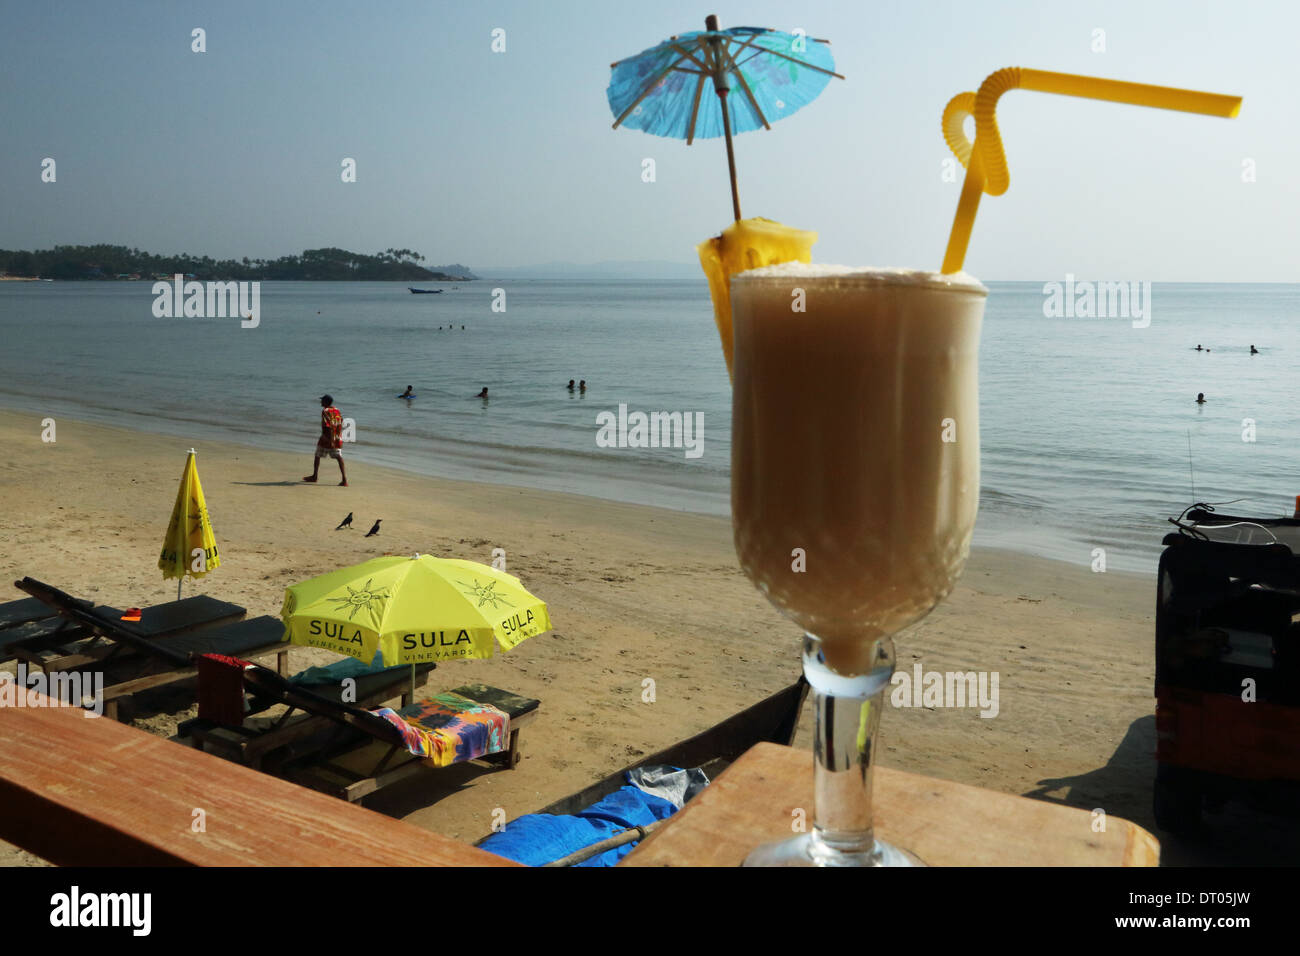 a pina colada drink on the Palolem beach in Goa, South India  Photo: pixstory / Alamy Stock Photo